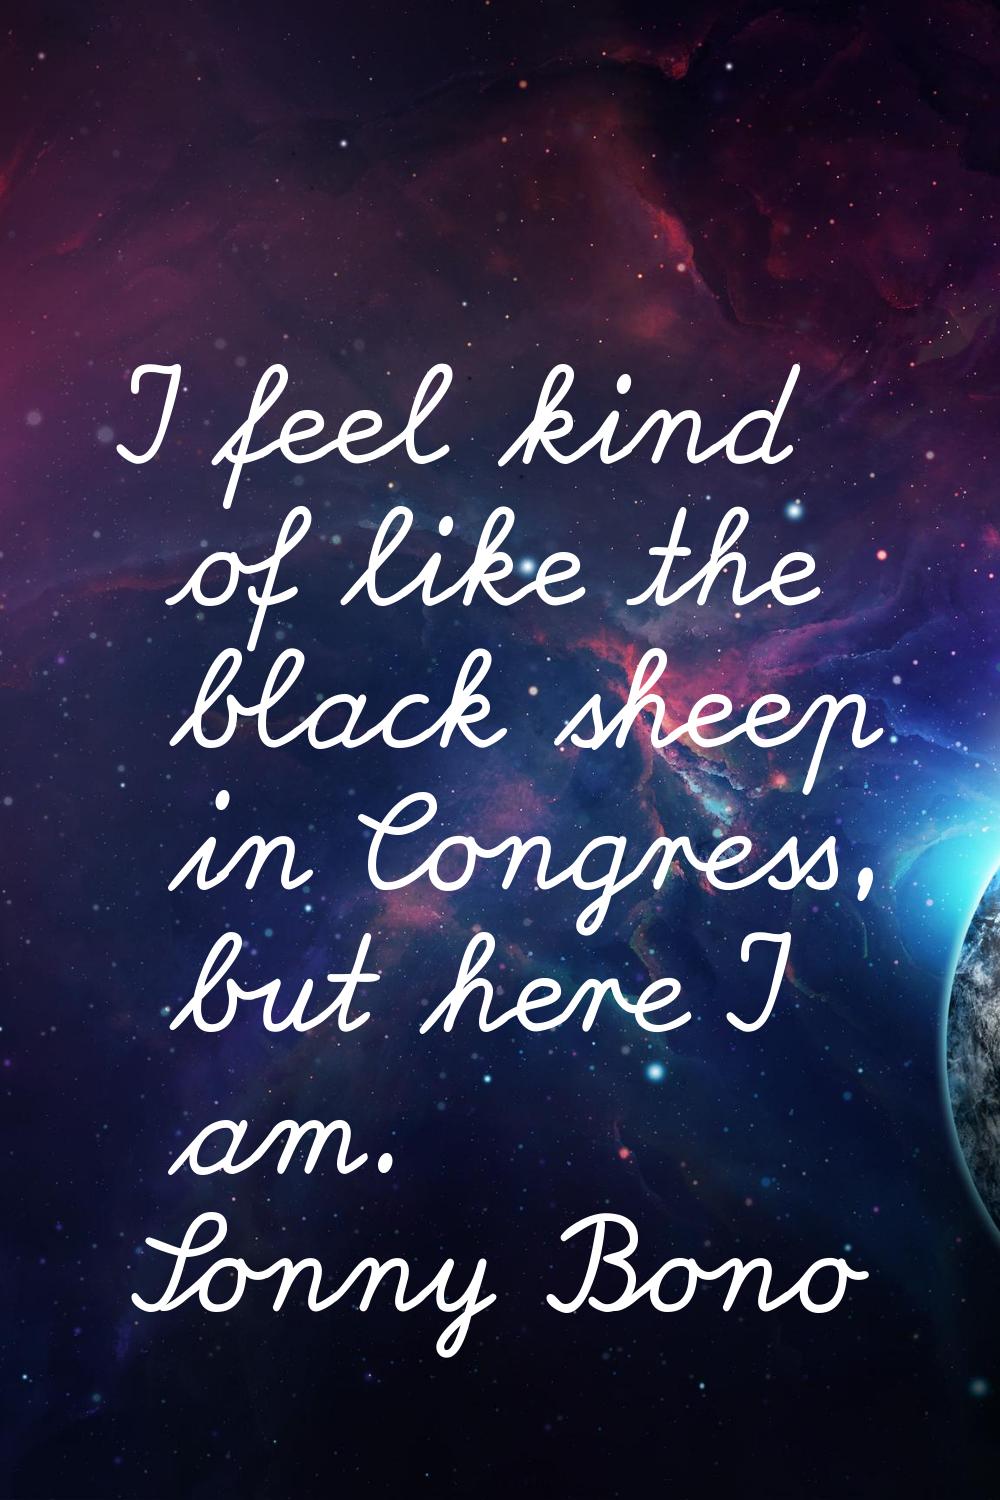 I feel kind of like the black sheep in Congress, but here I am.